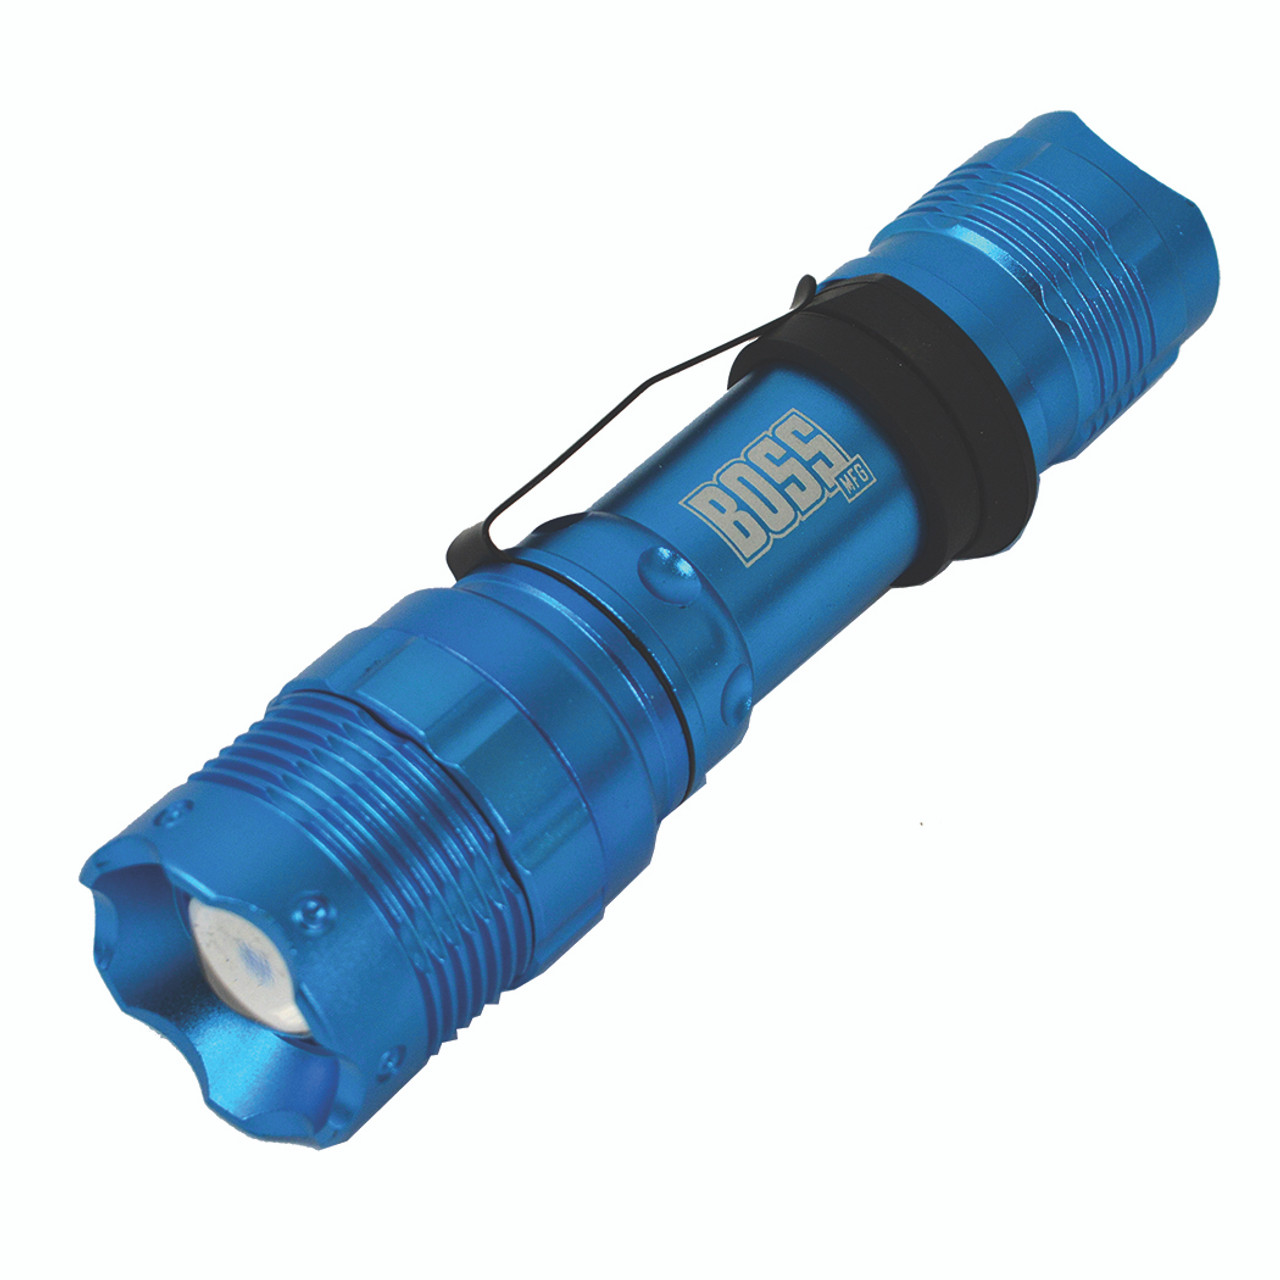 3W Cree® LED Focusing Flashlight  234439